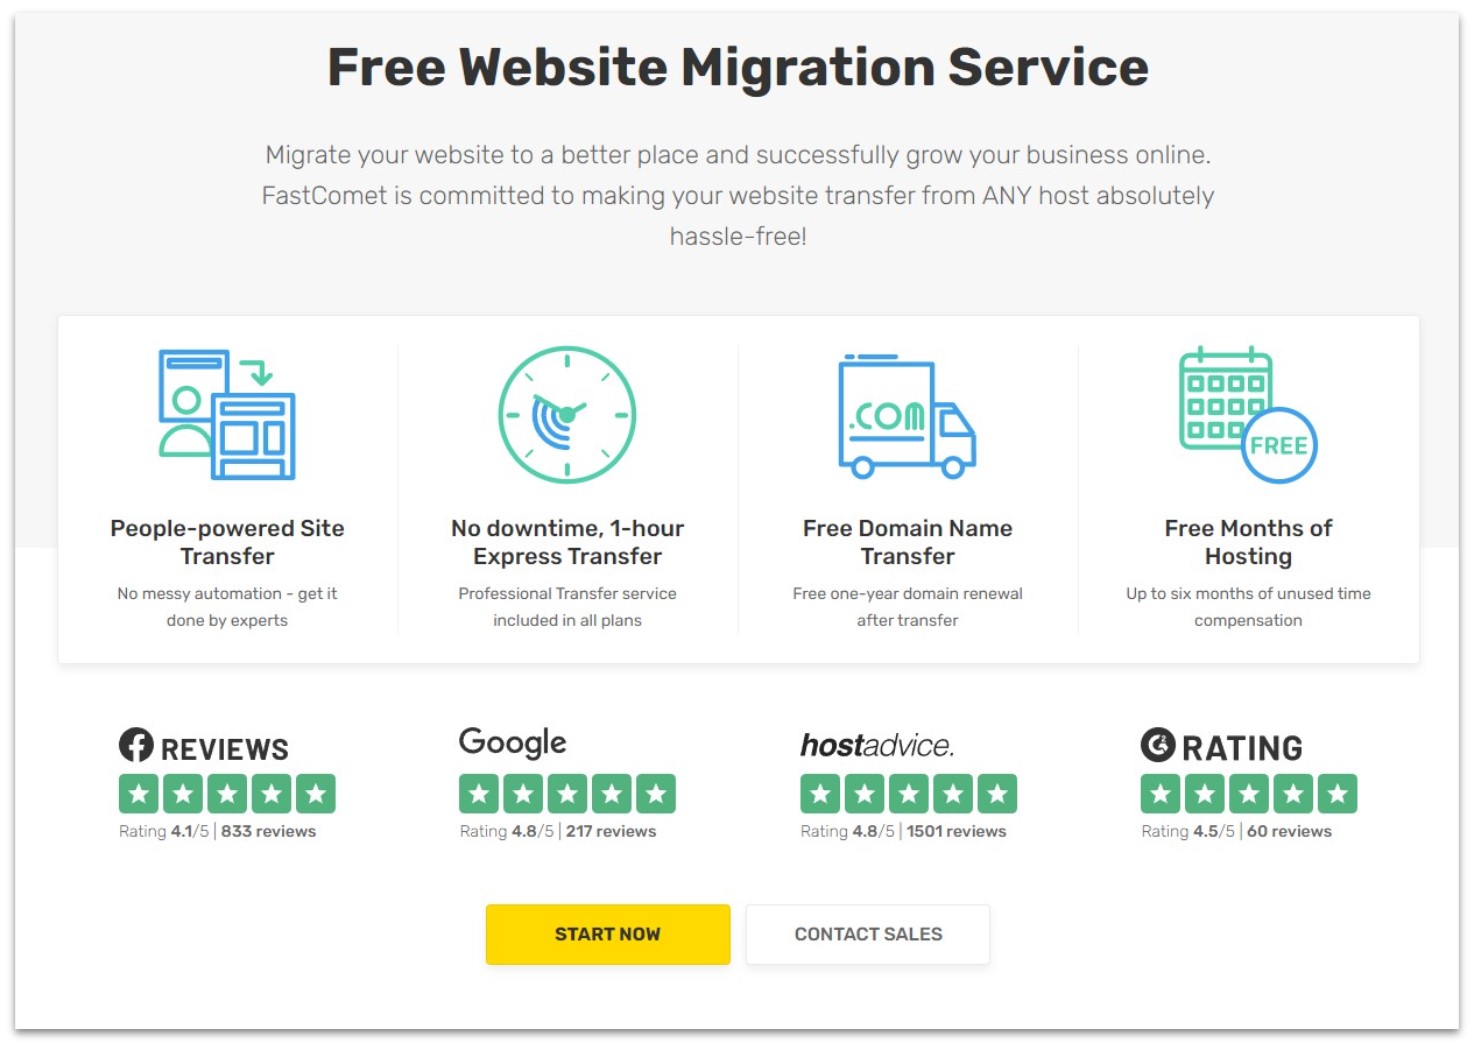 FastComet hosting's free website migration services